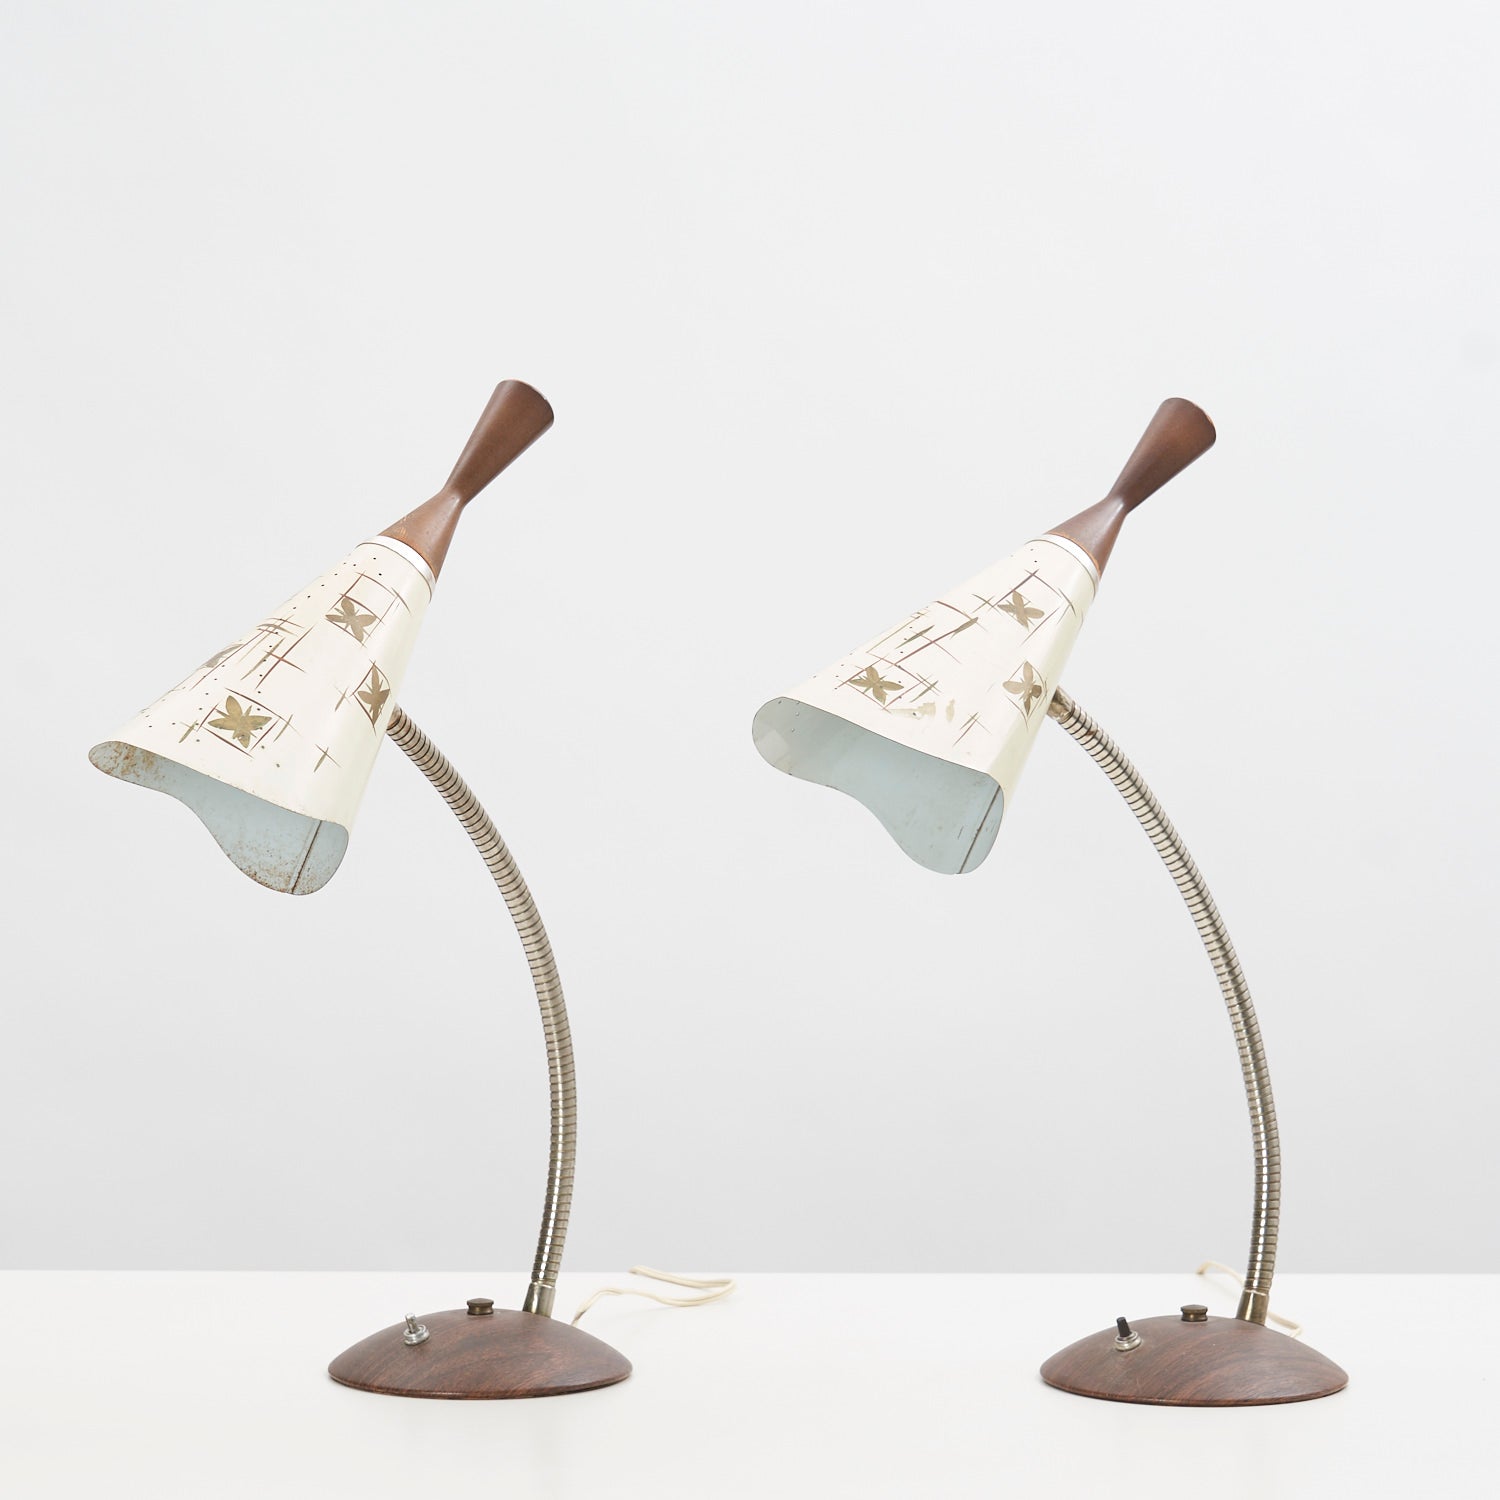 Pair of Vintage Gooseneck Lamps